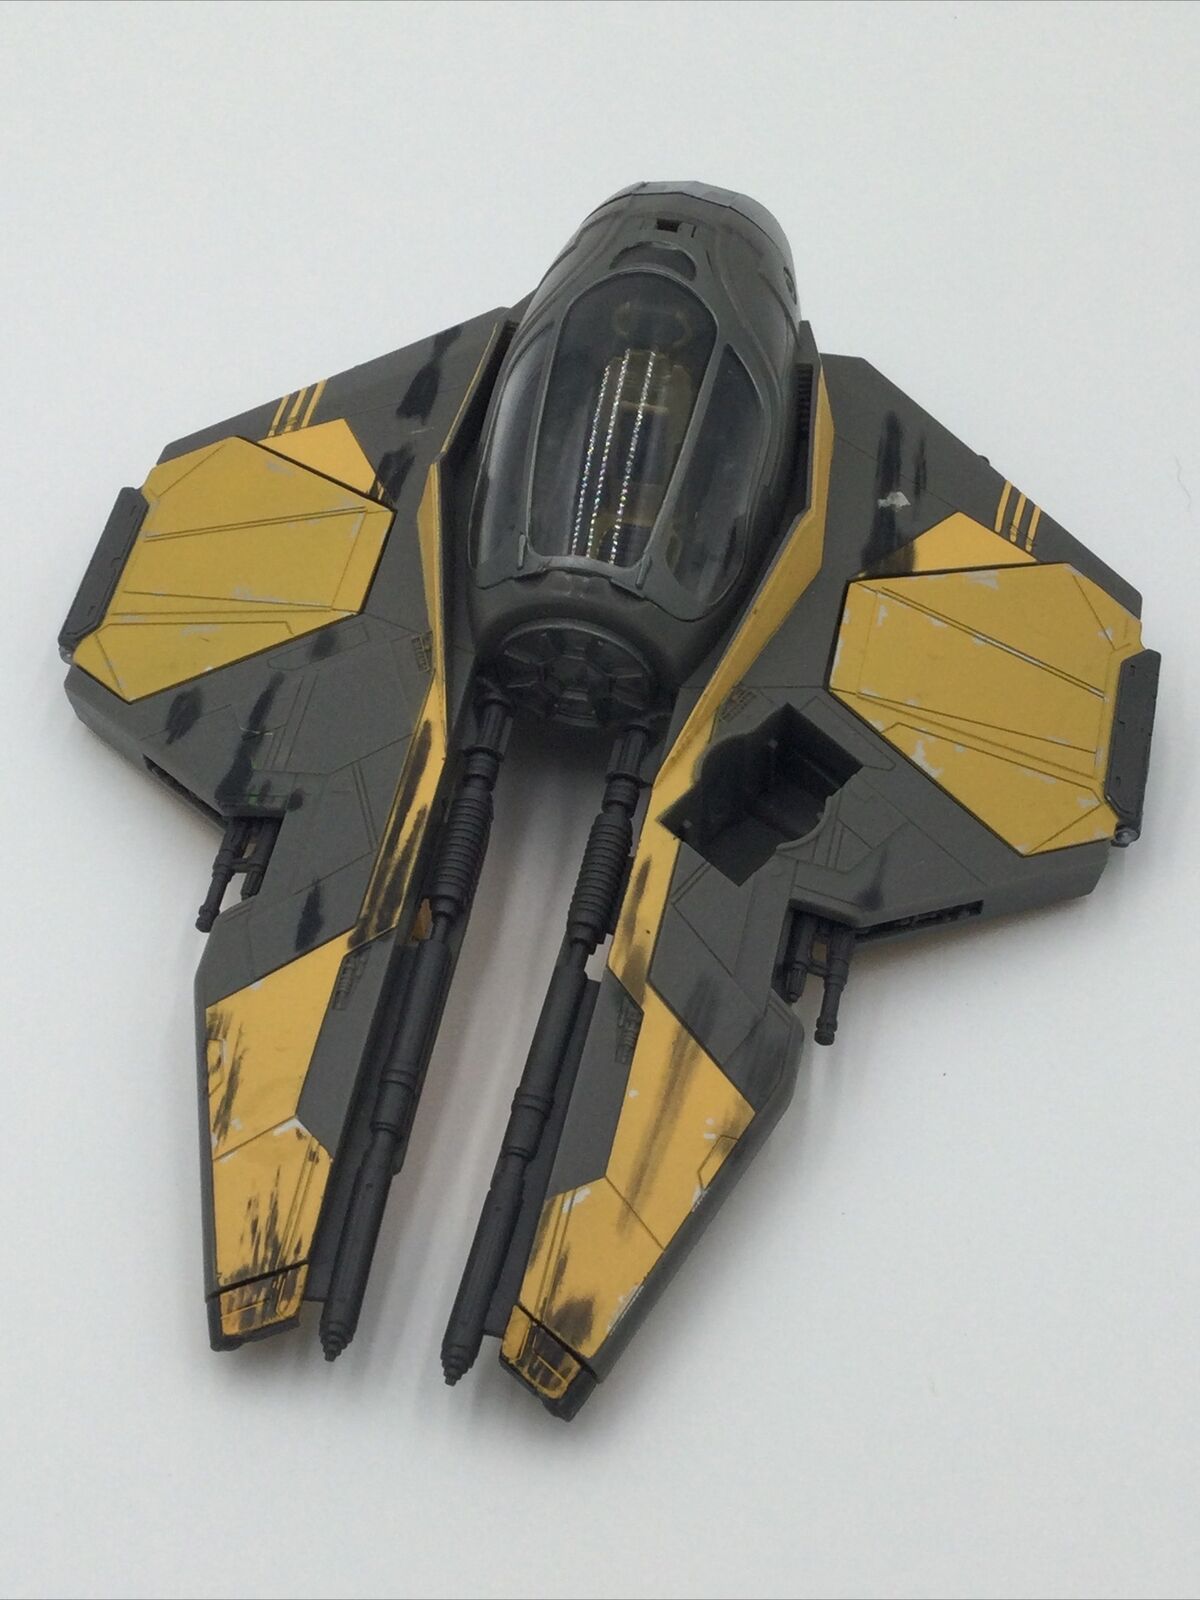 2004 Hasbro Star Wars Anakin Skywalker Jedi Fighter Ship Starfighter Yellow/Grey